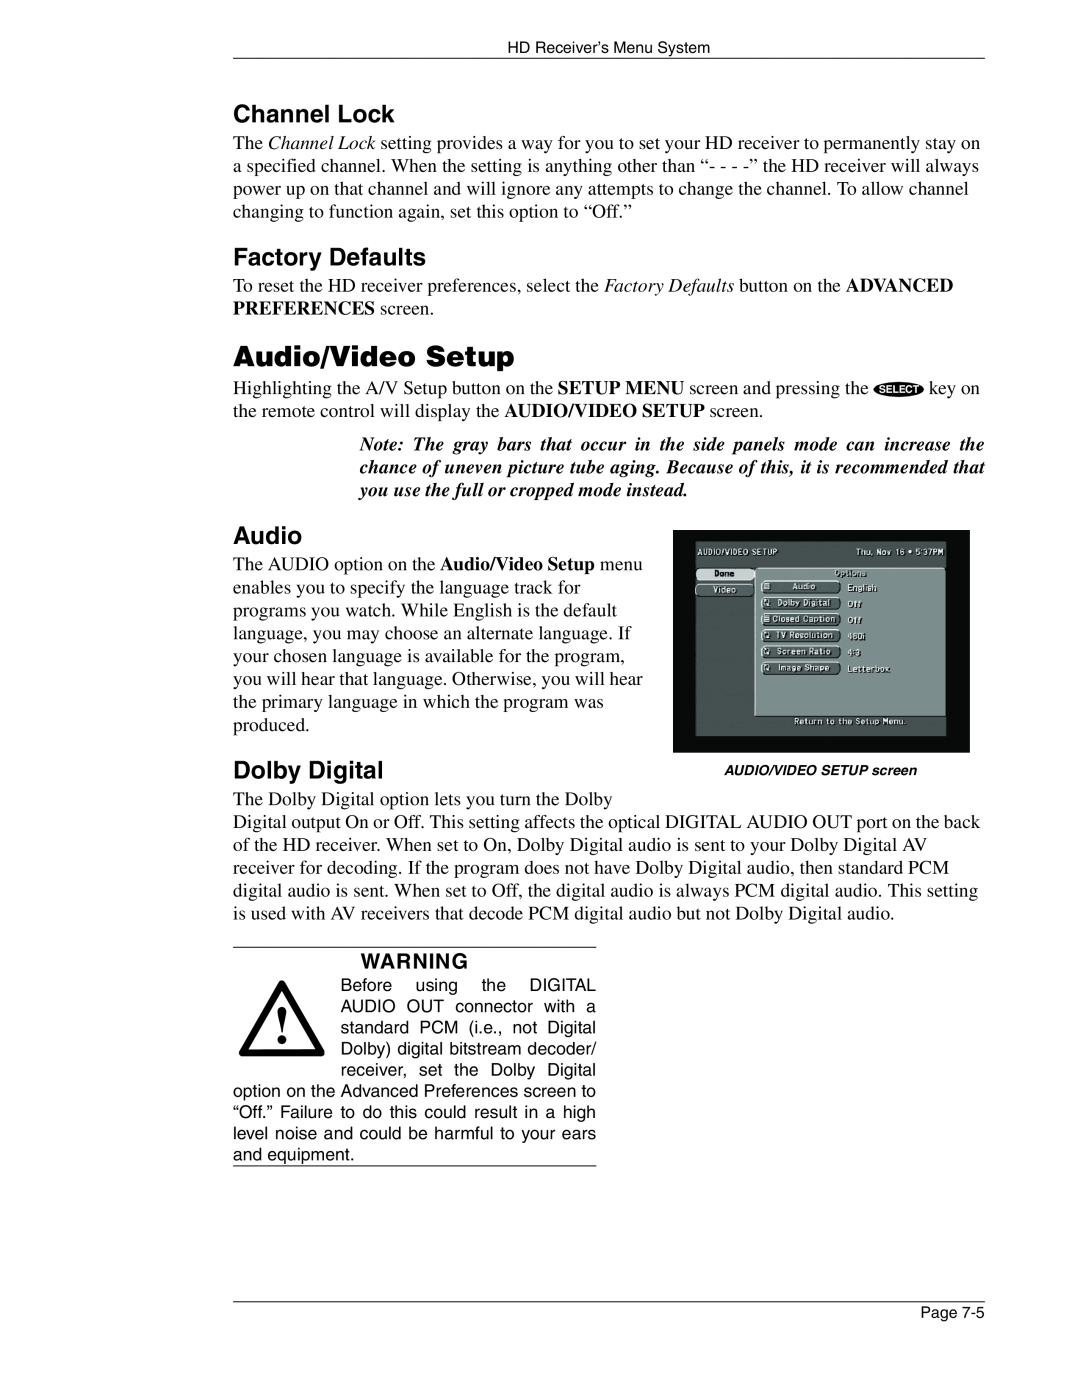 DirecTV HIRD-E86 manual Audio/Video Setup, Channel Lock, Factory Defaults, Dolby Digital 